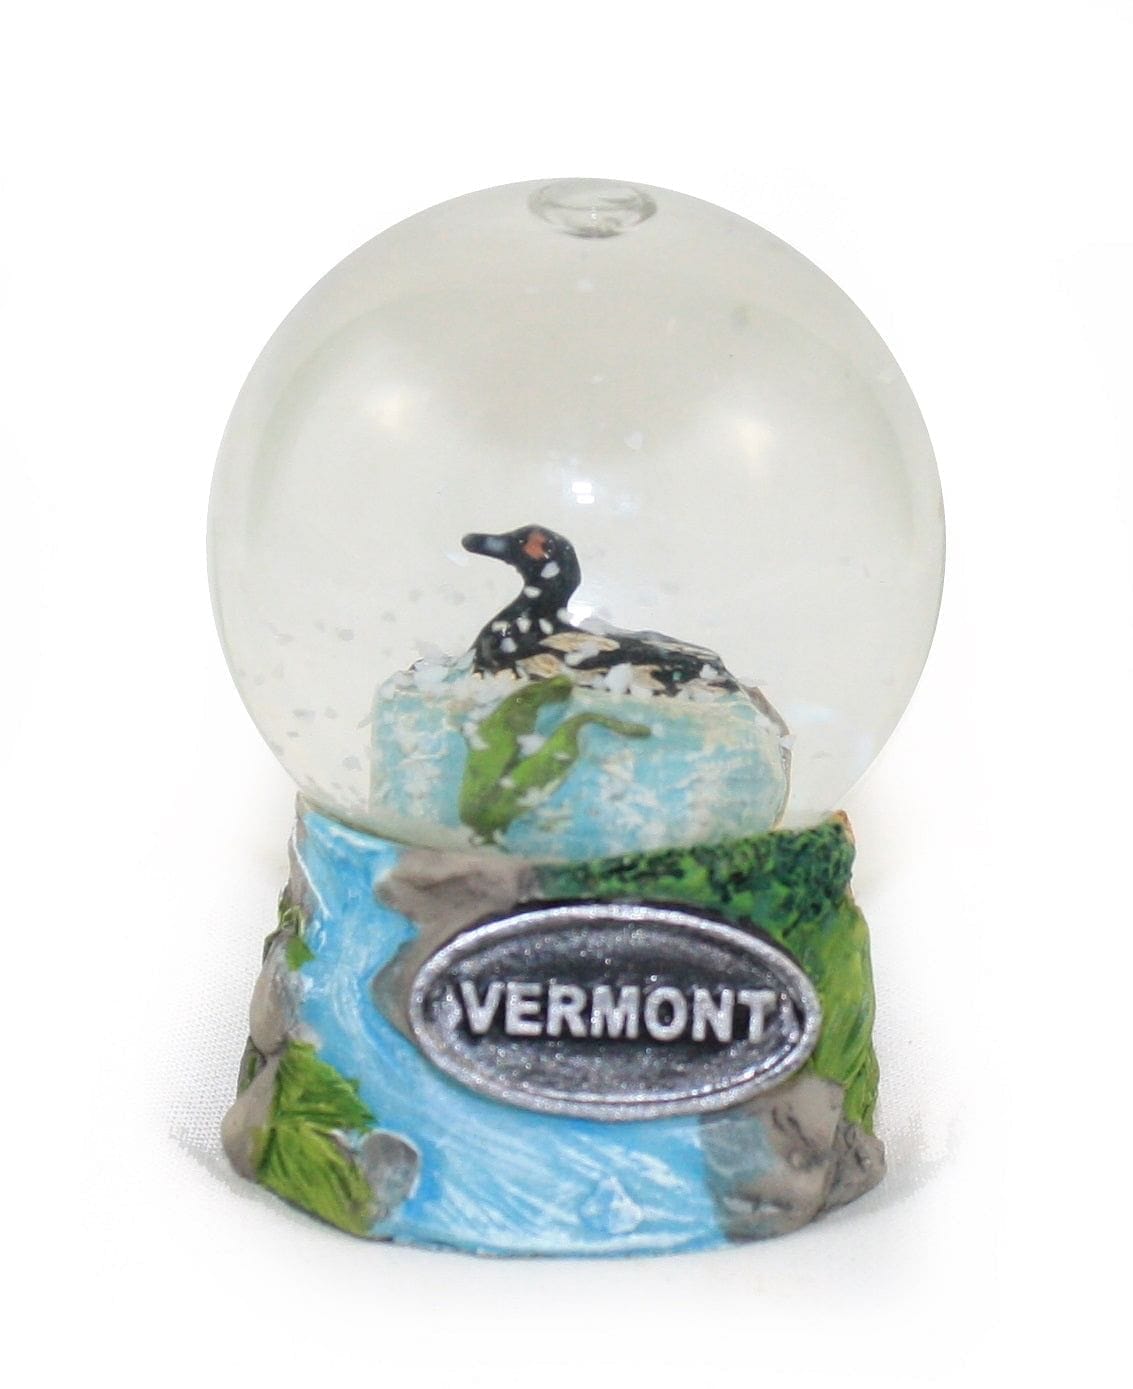 Vermont Snow Globe - Black Bear